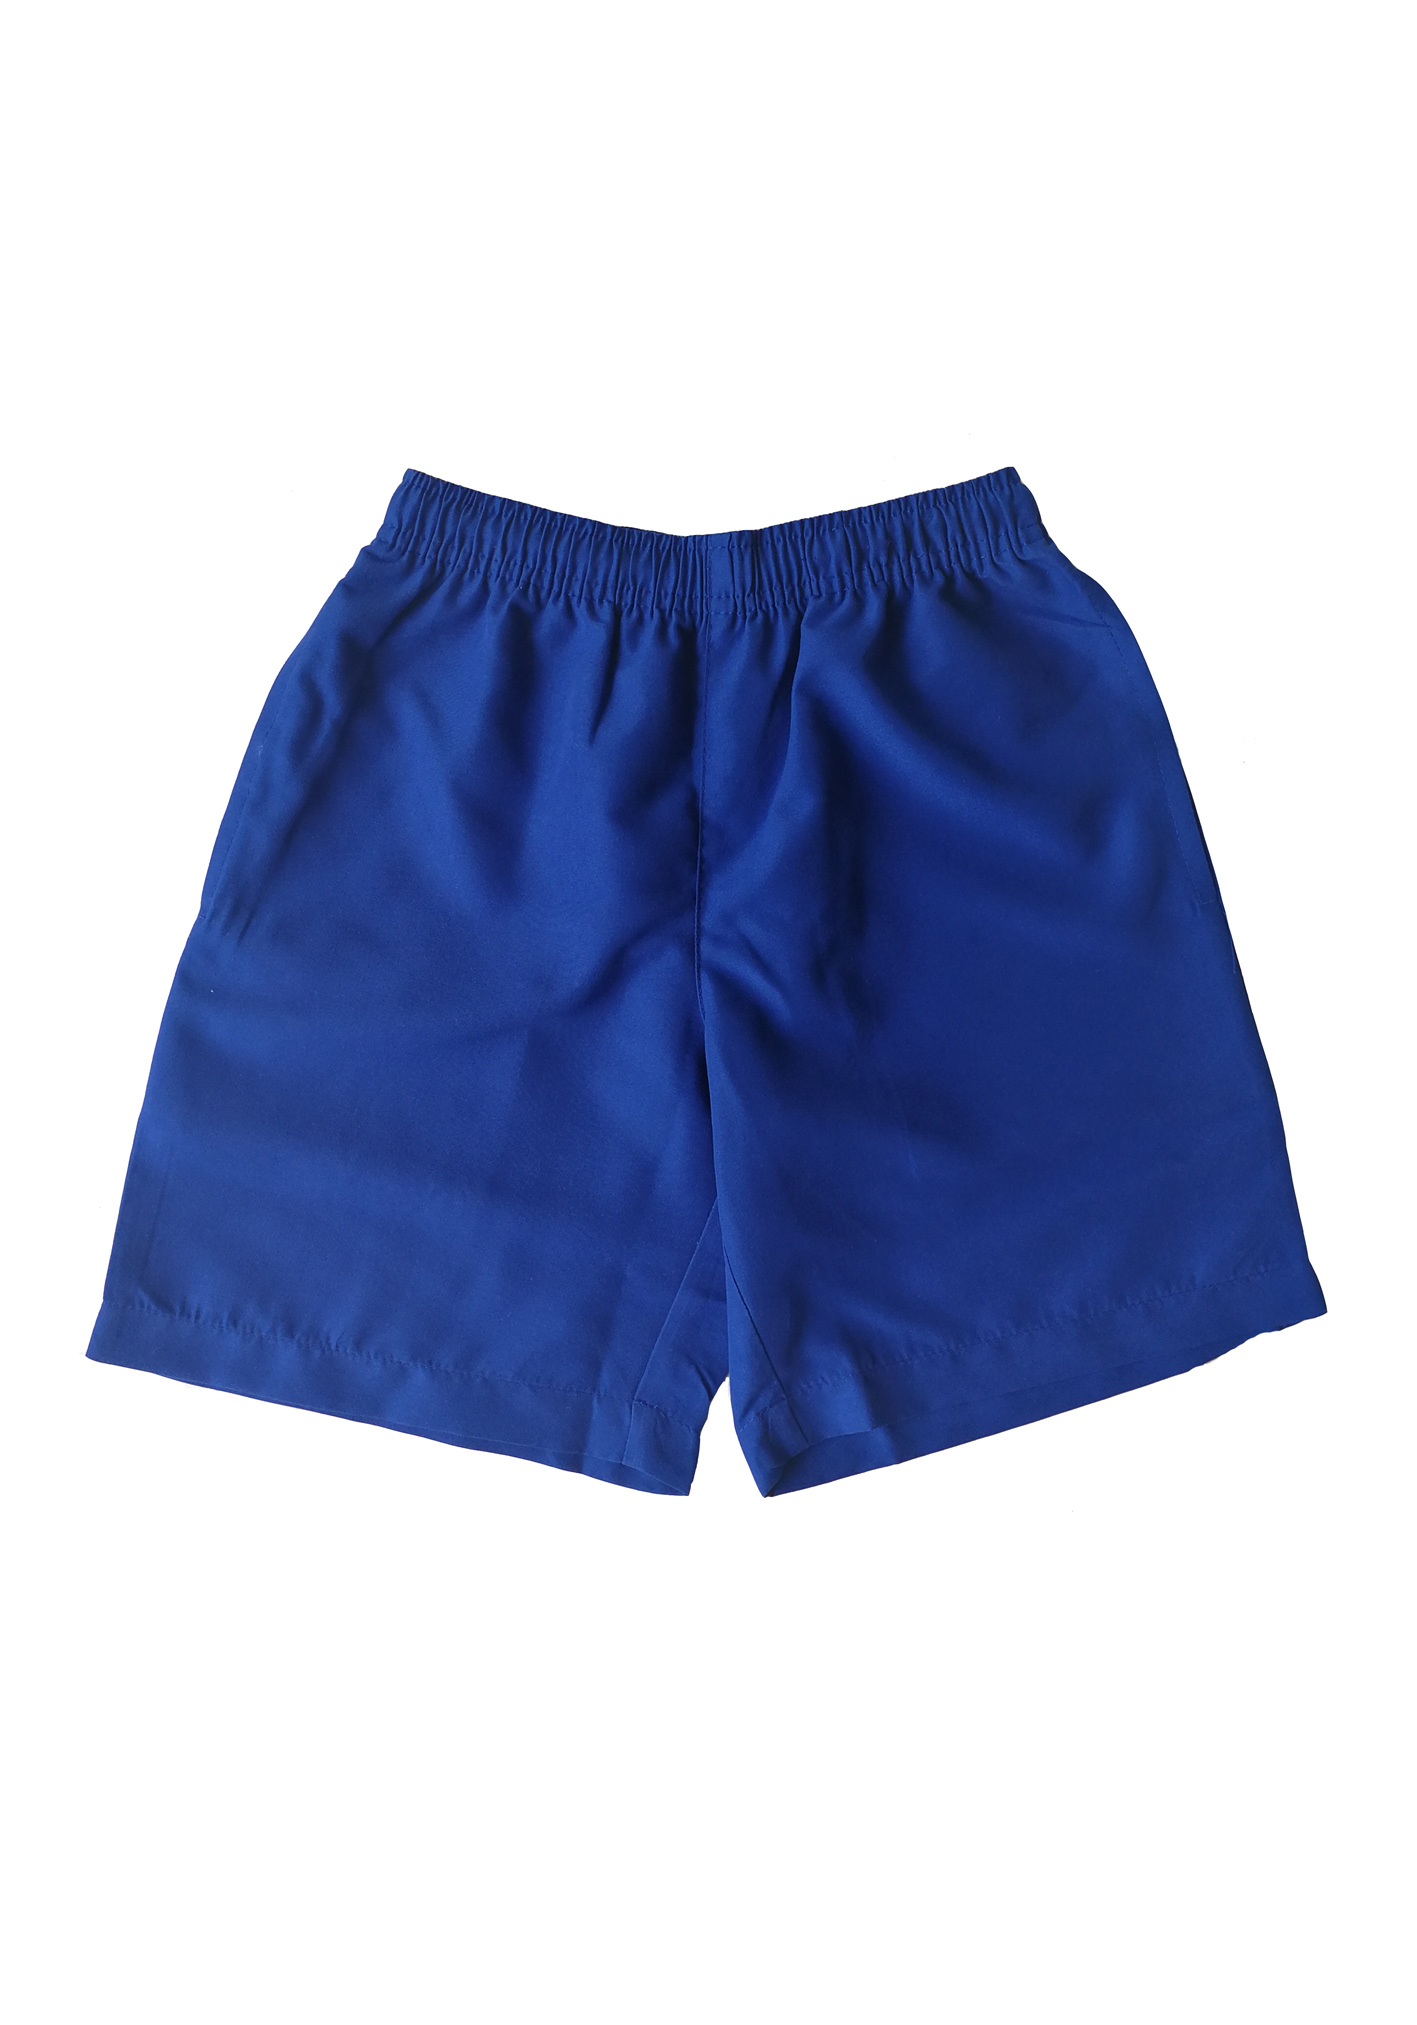 Mowbray Unisex Microfibre Sport Shorts Royal | Shop at Pickles ...